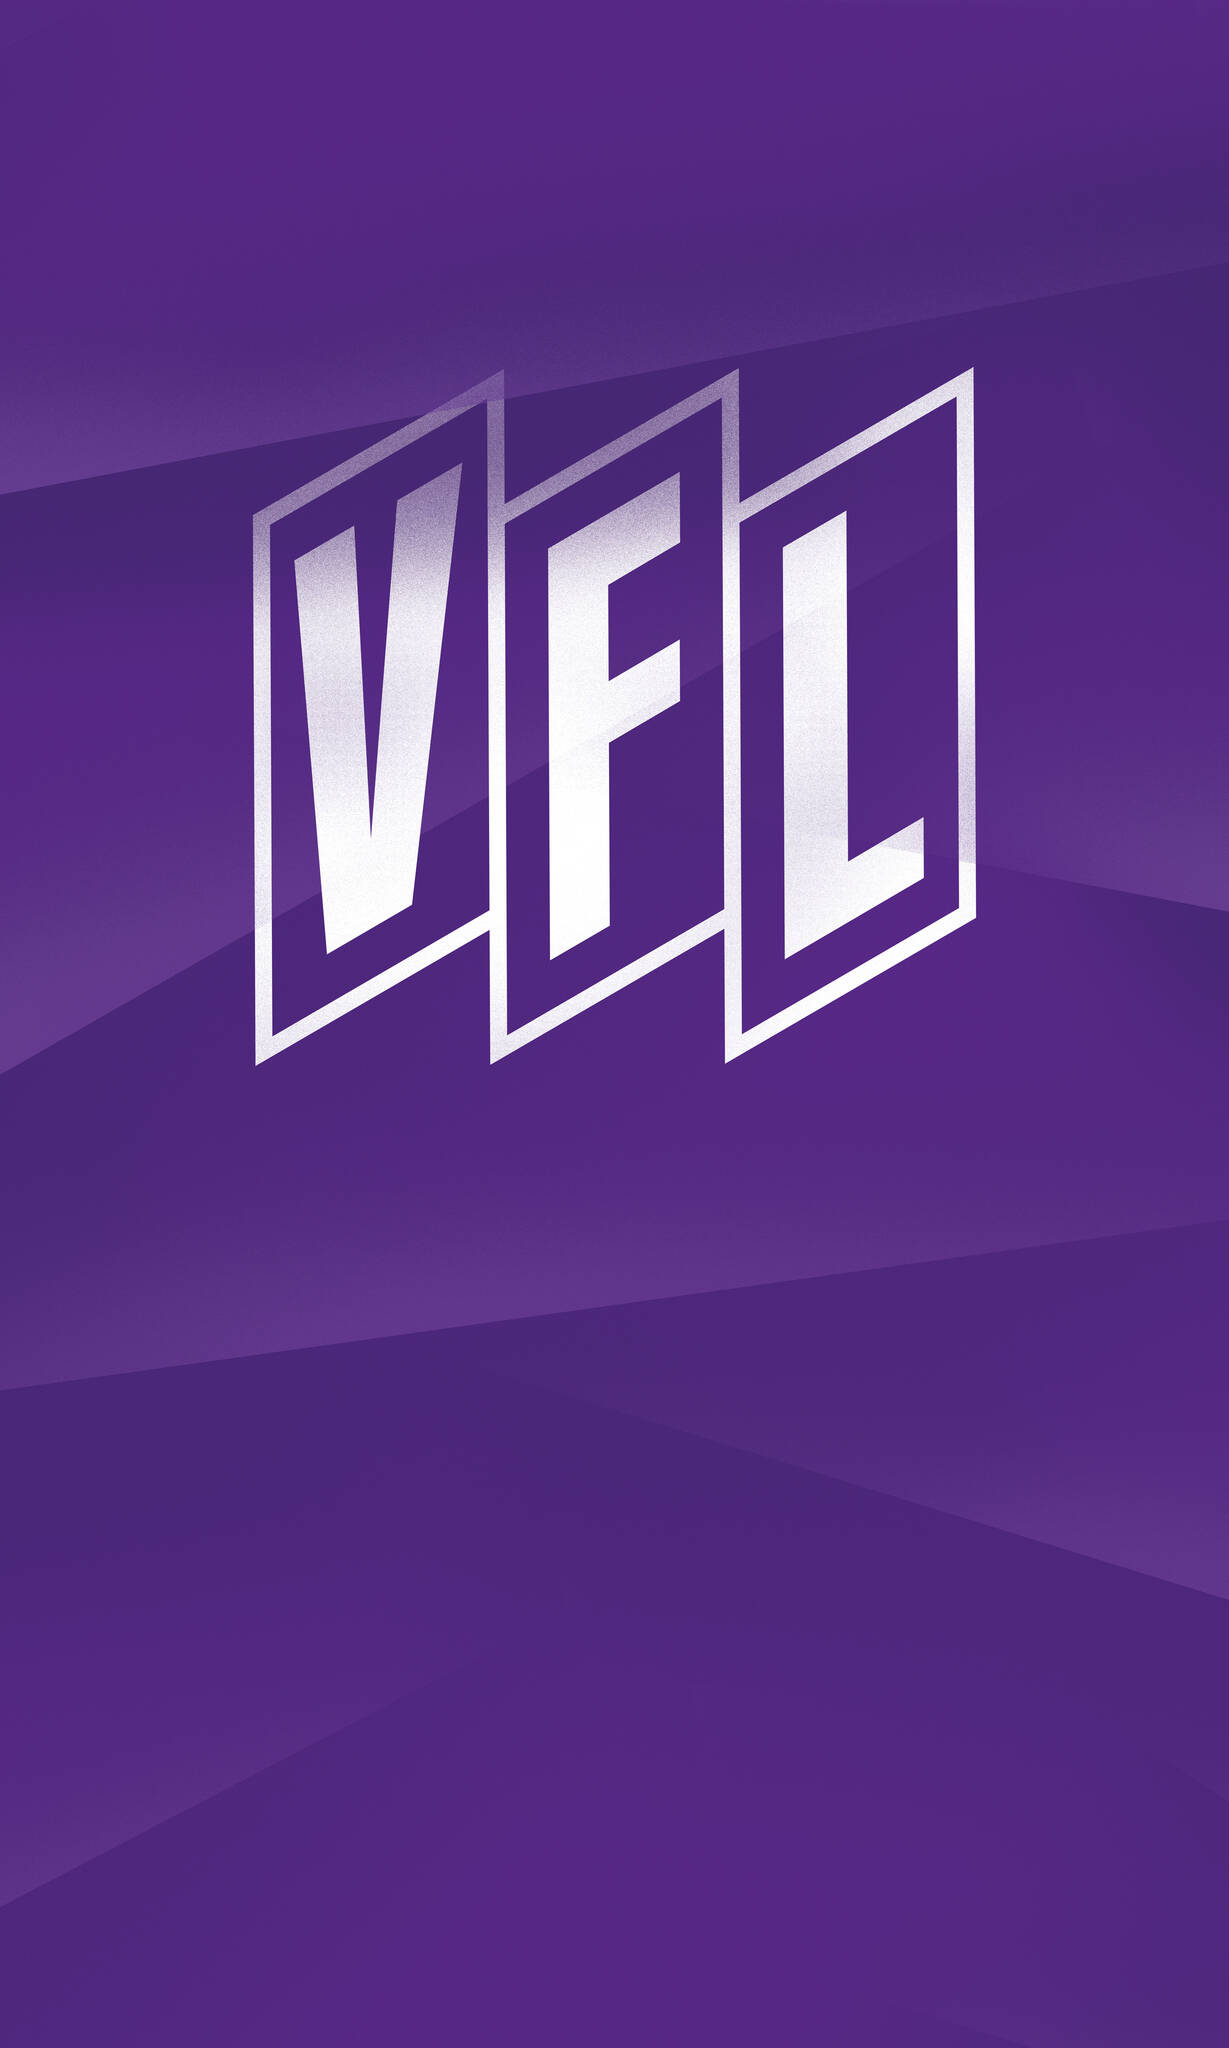 Fototapete mit Vfl Osnabrück Logo